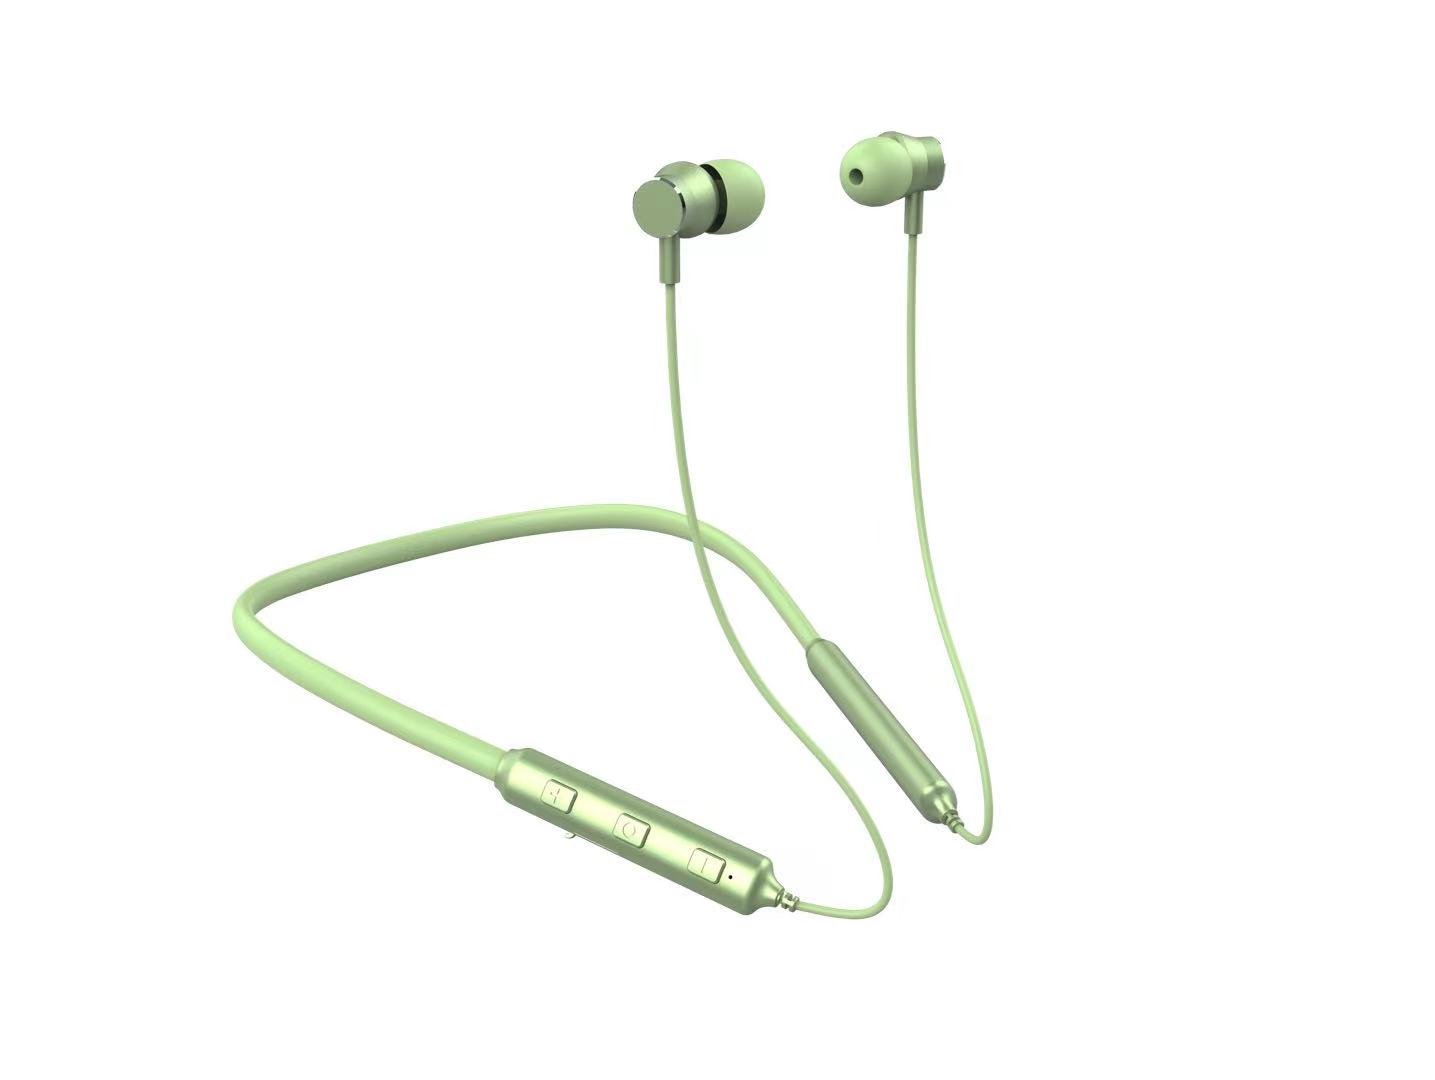 Fithem-KWSI KS026 neckband earphone සමඟ වේගවත් ආරෝපණය, හෝල් ස්විචය විශේෂාංගිත රූපය